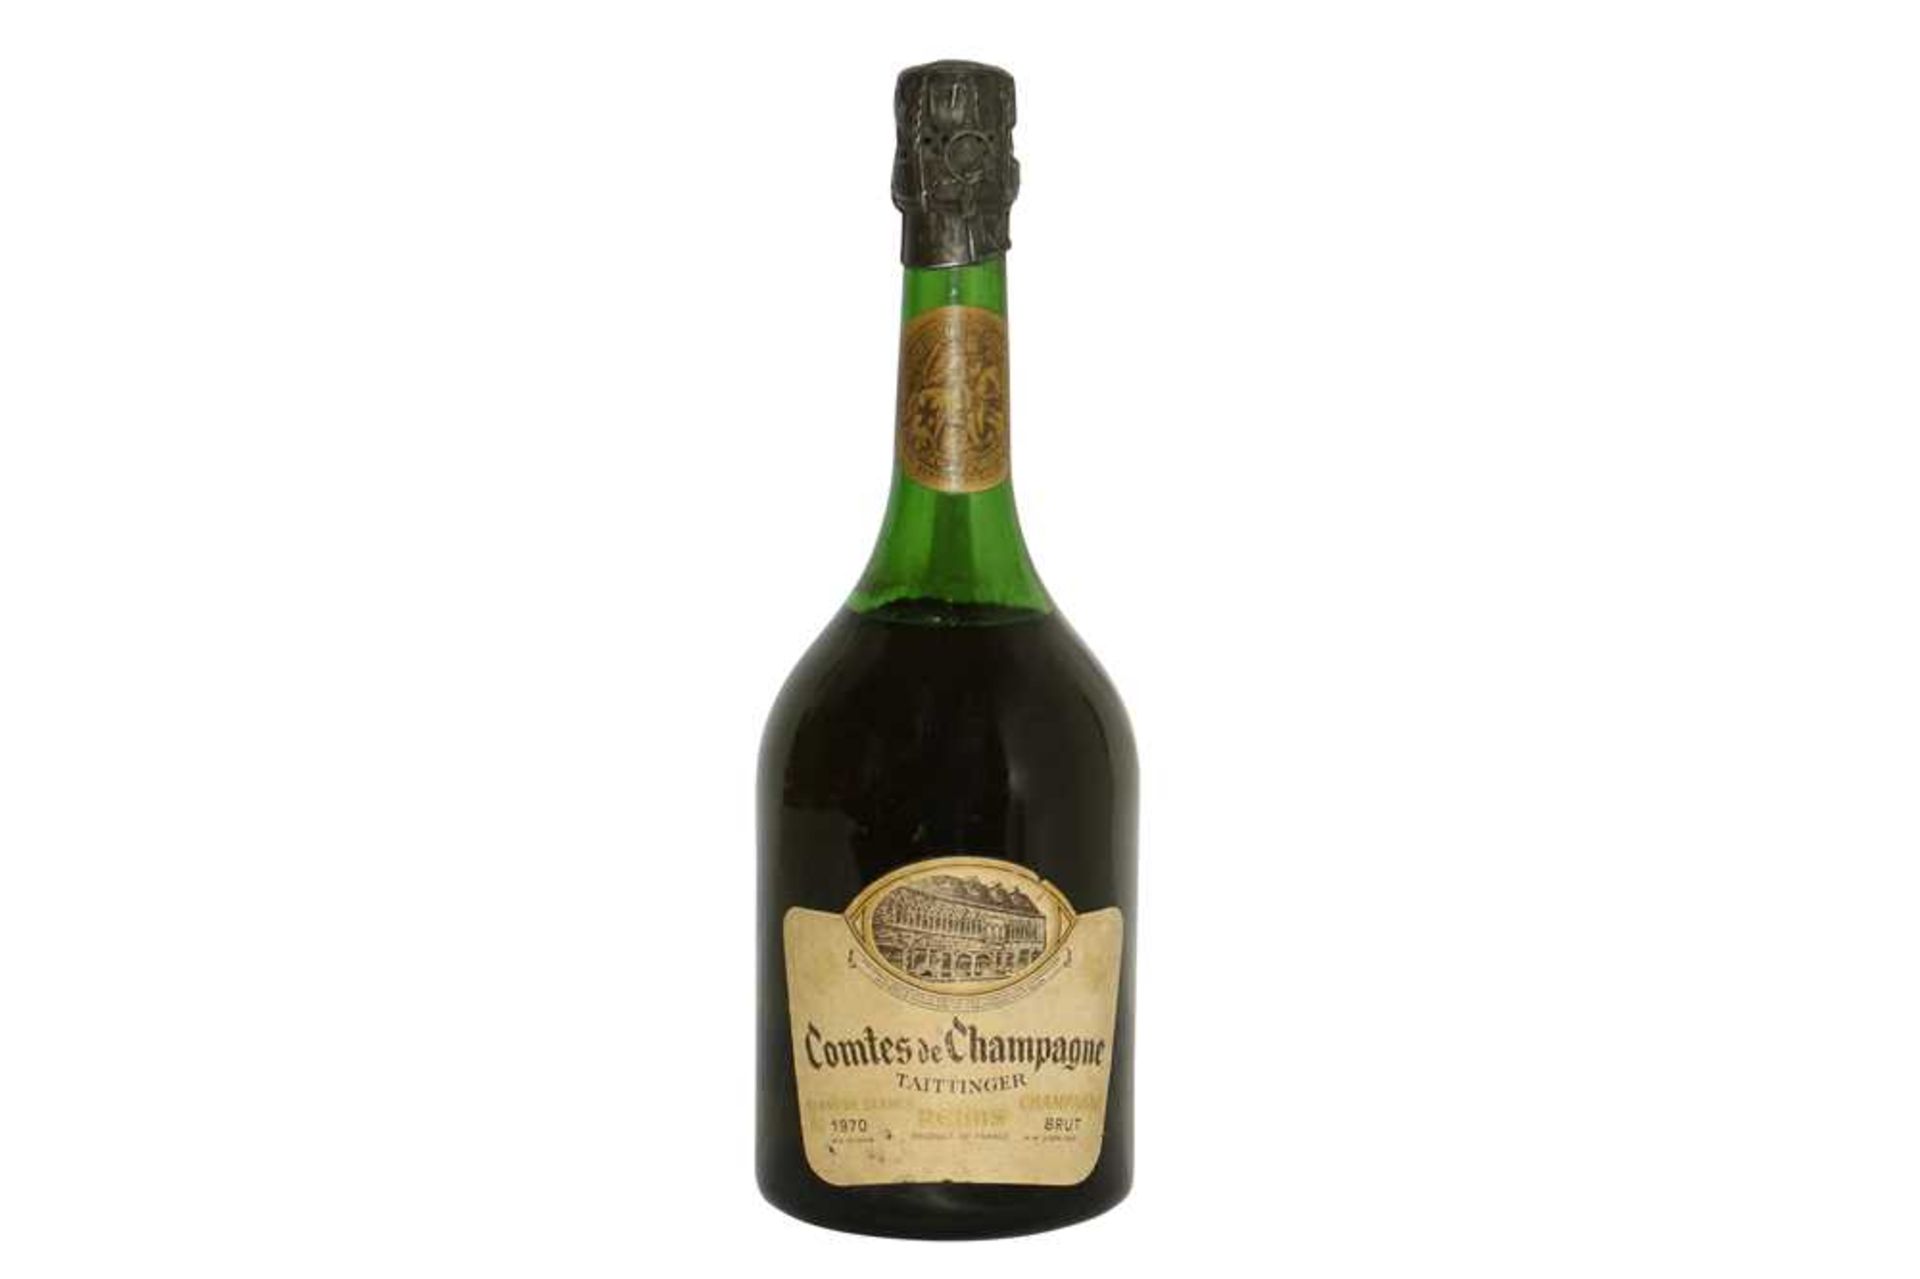 Taittinger, Comtes de Champagne, Reims, 1970, one bottle